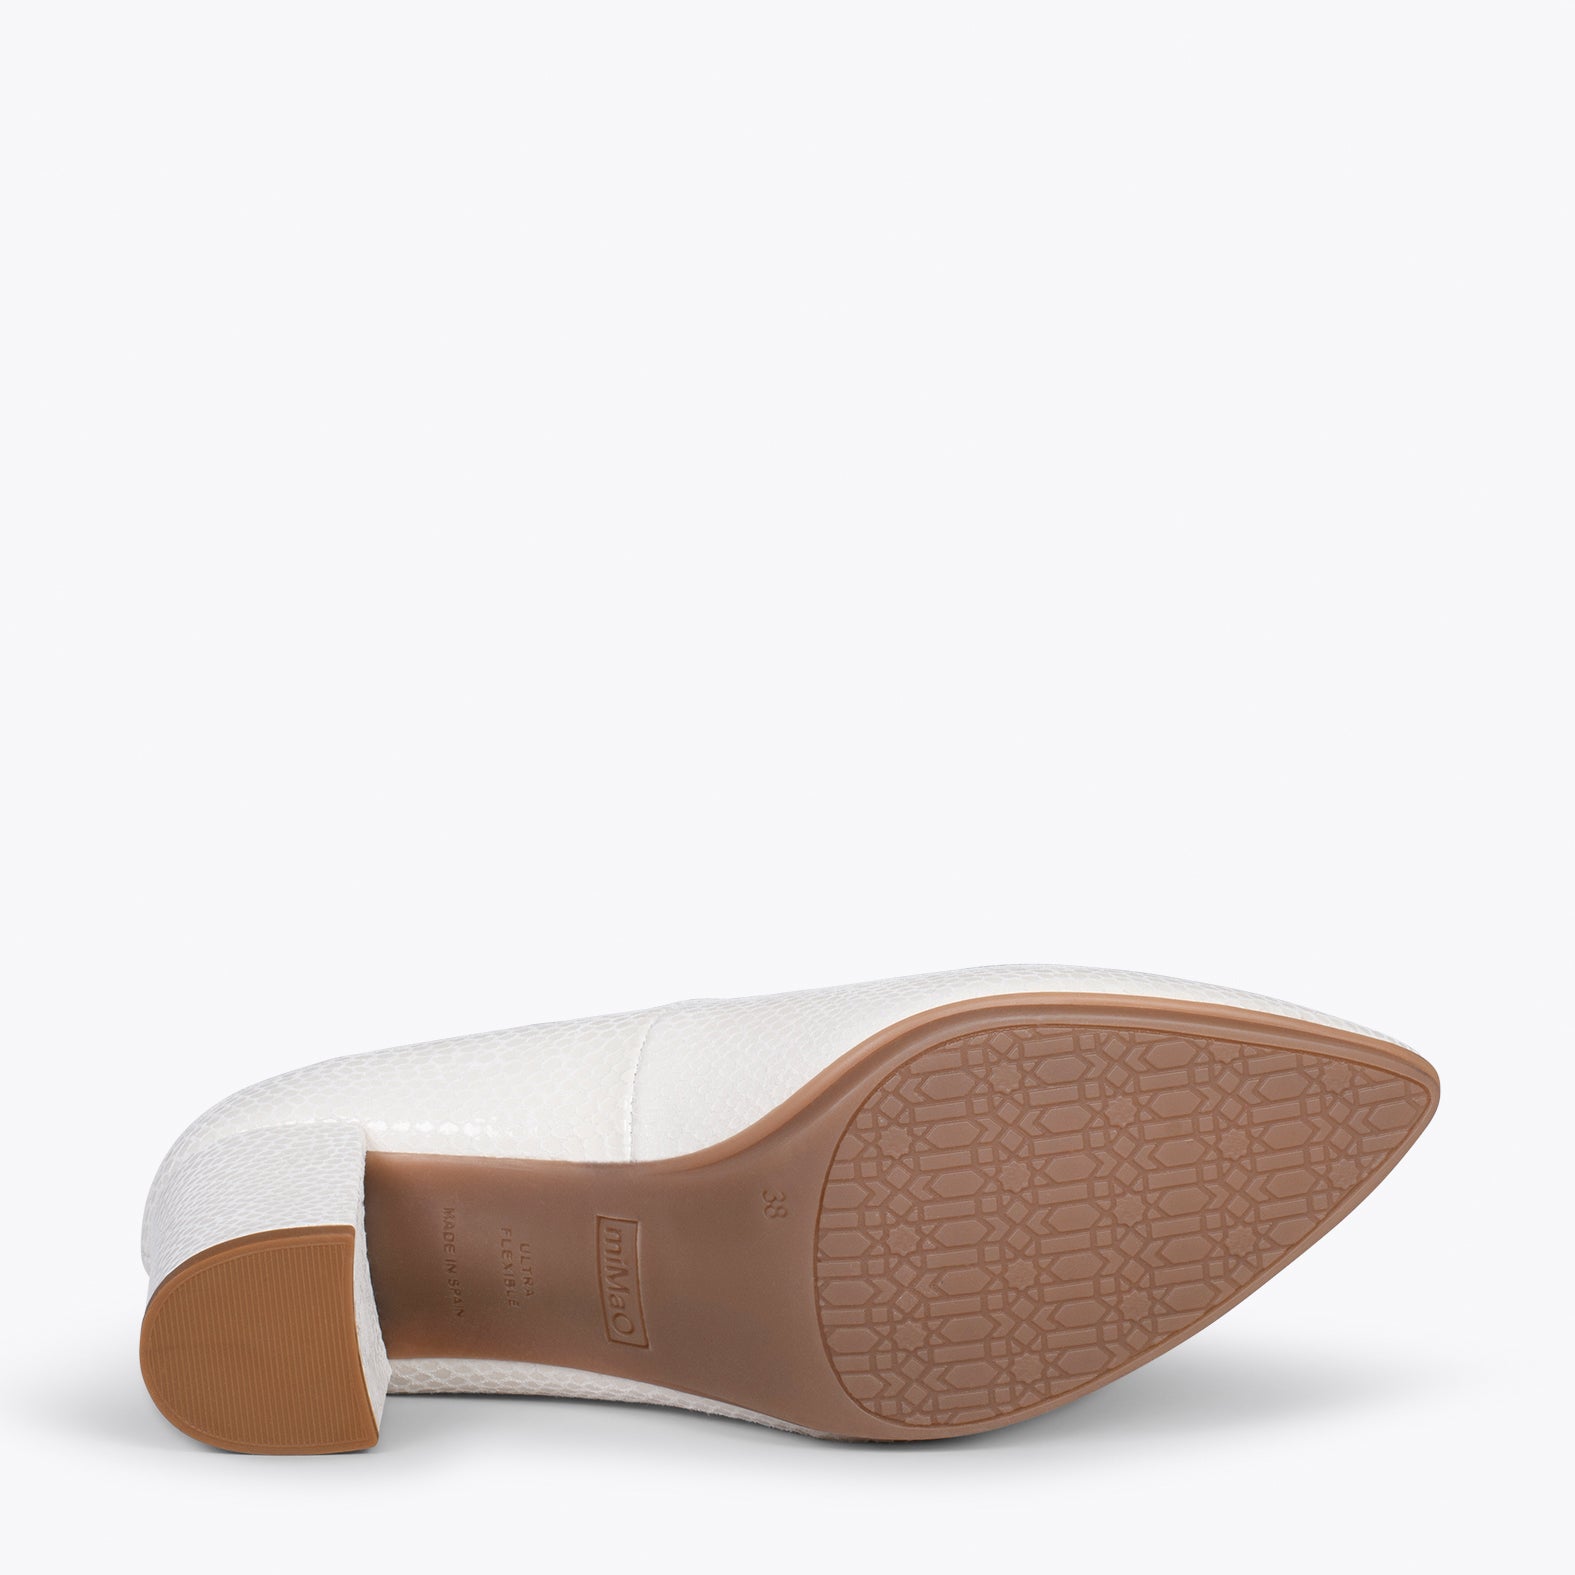 URBAN S ROYAL – WHITE laminated suede mid heel